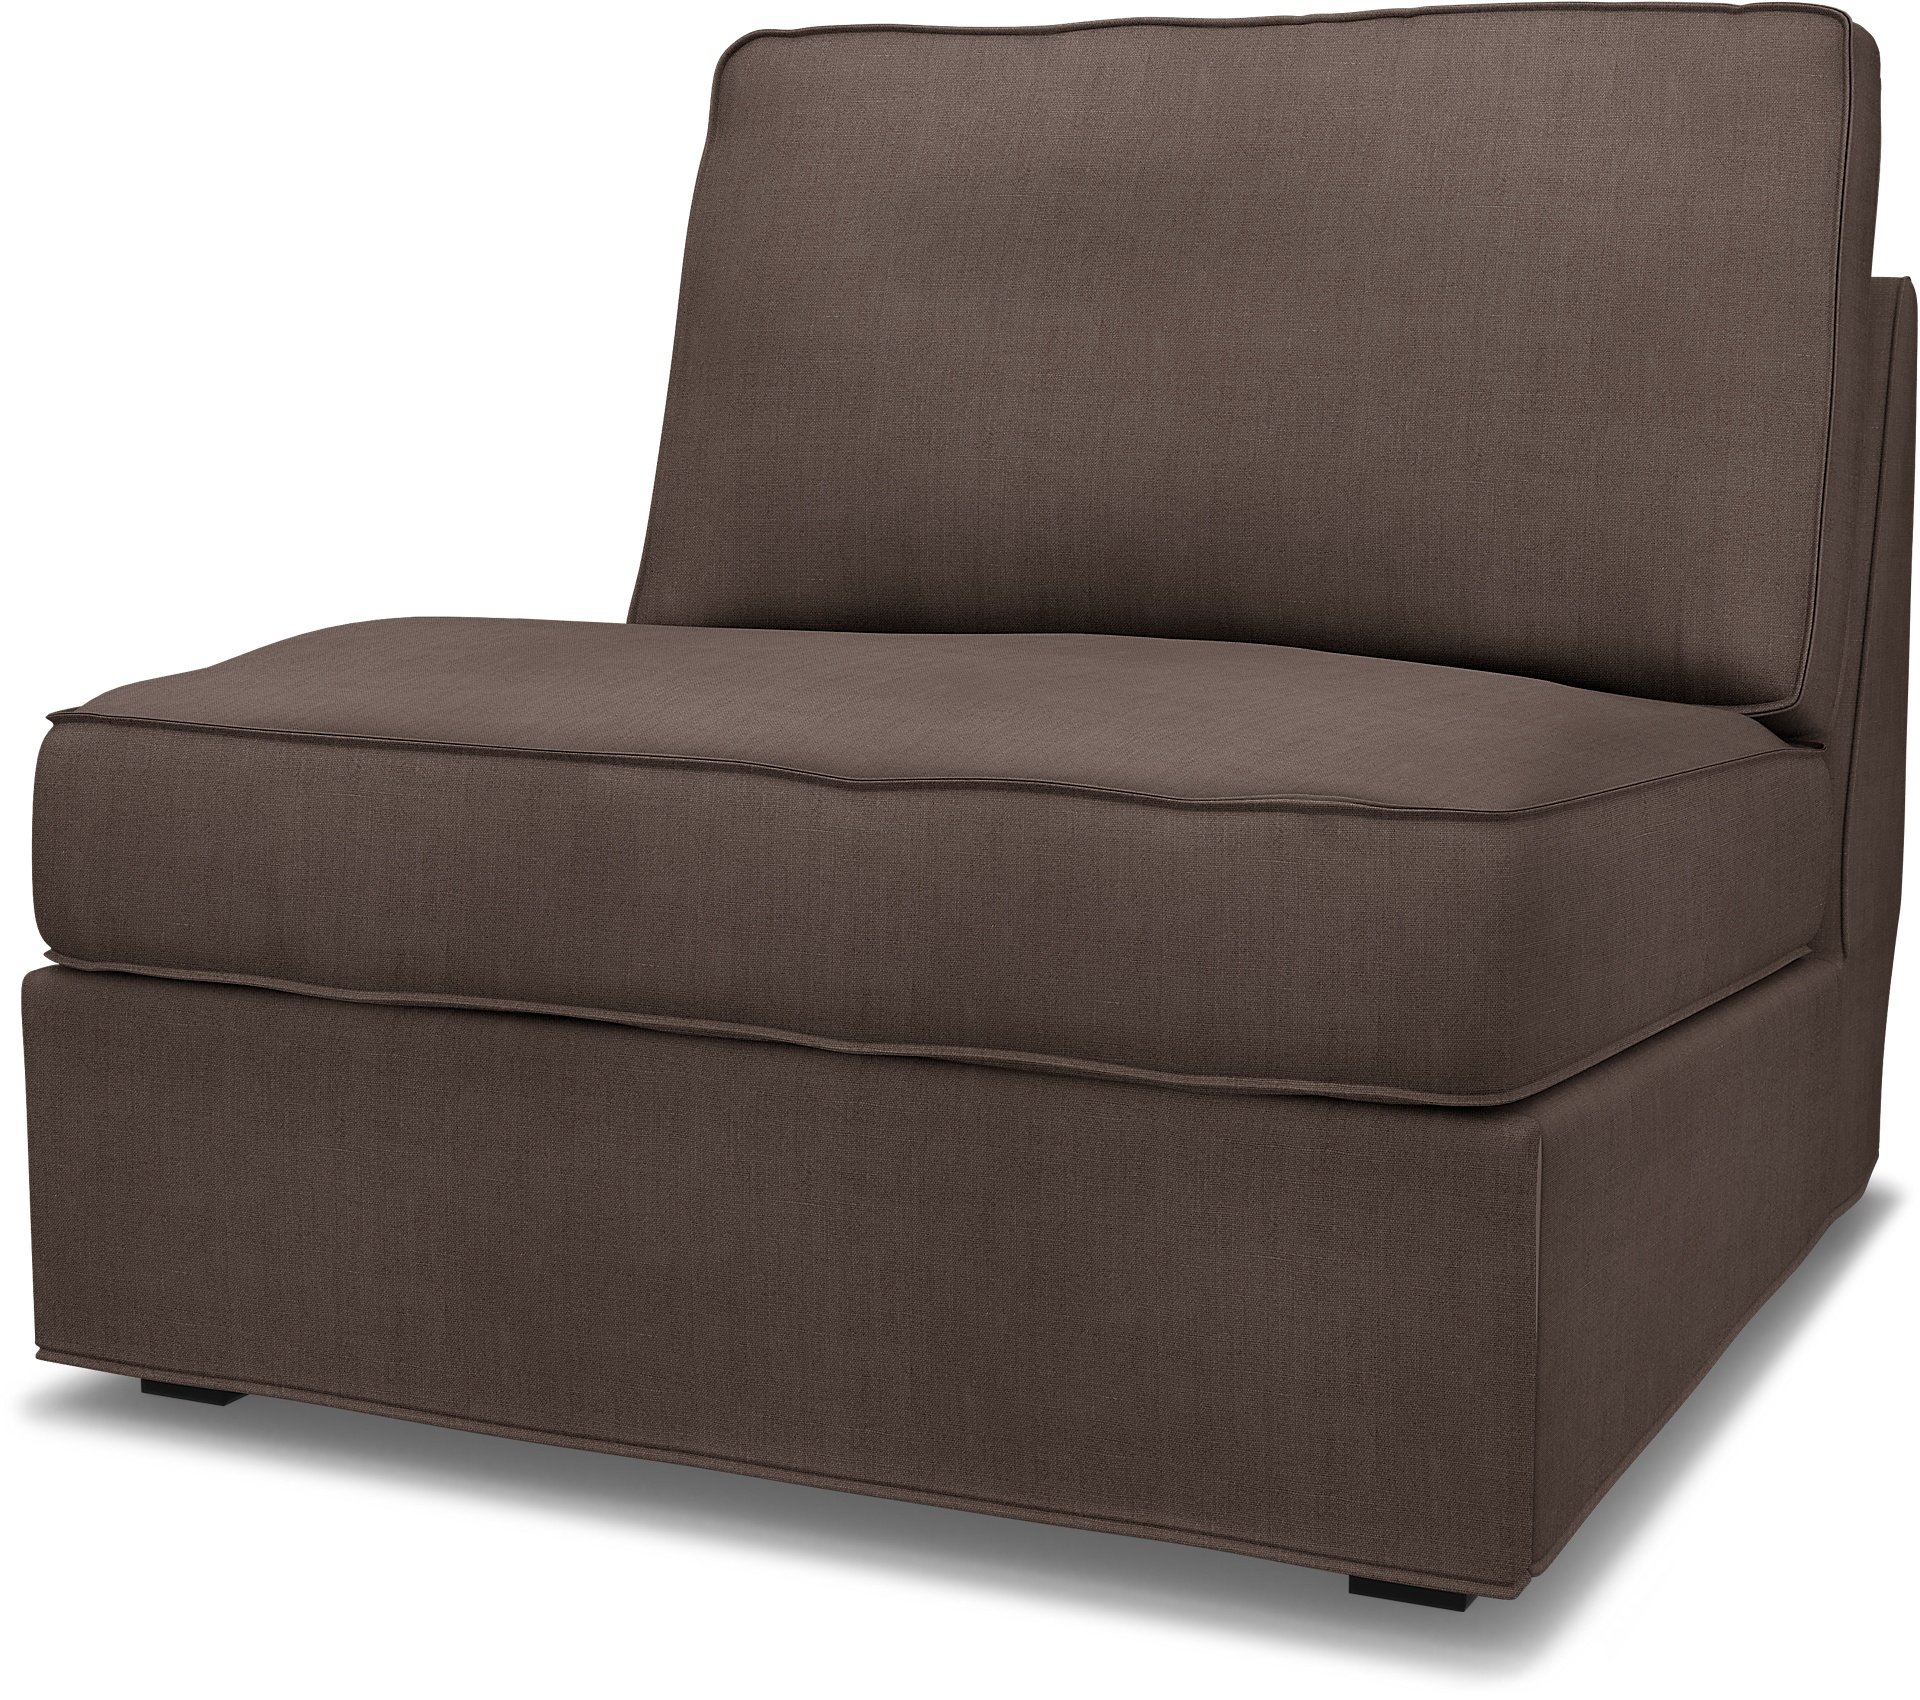 IKEA - Kivik 1 seater sofa bed, Cocoa, Linen - Bemz